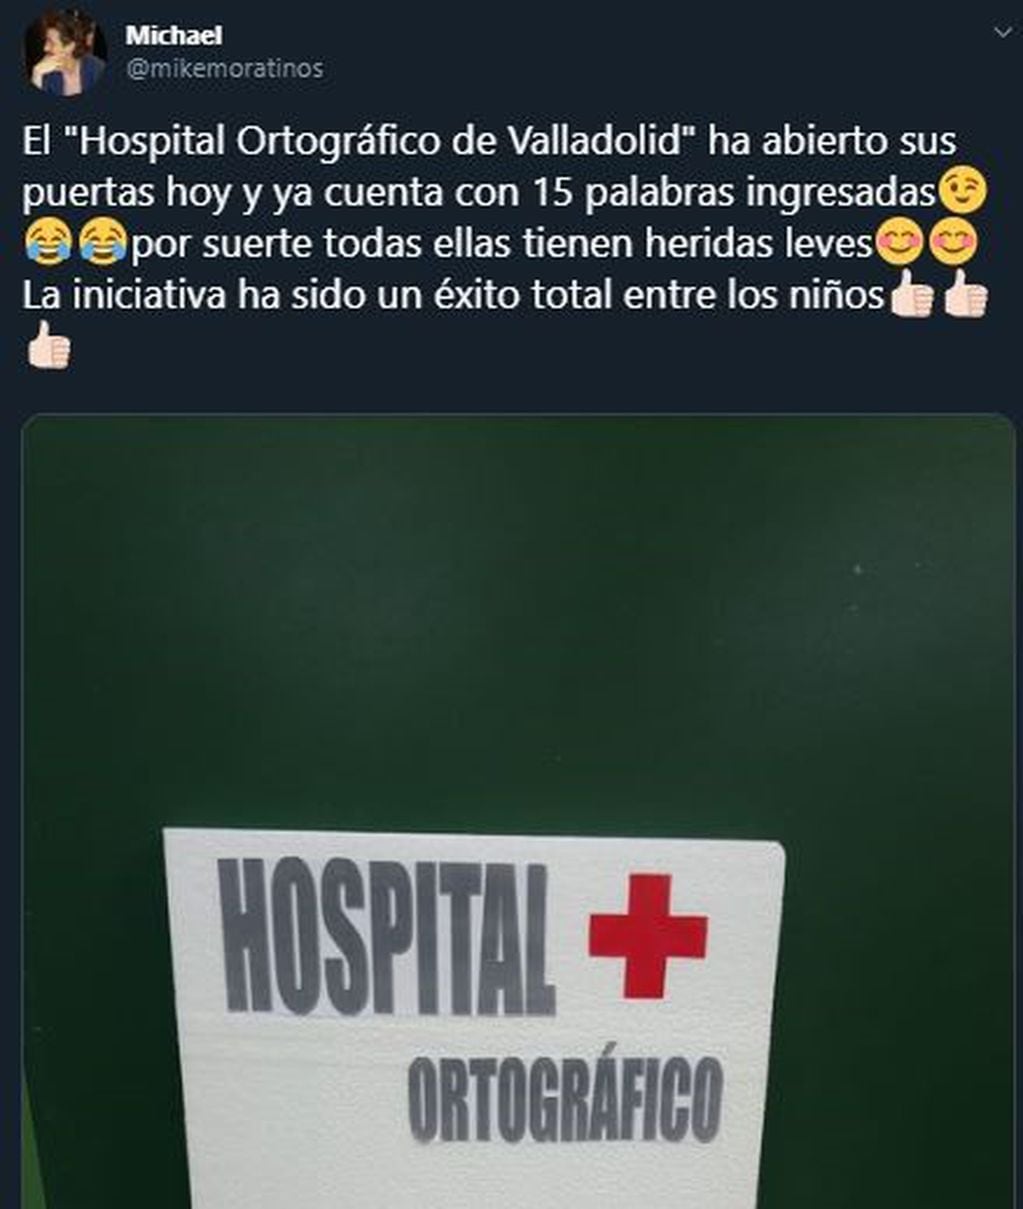 El “Hospital Ortográfico”